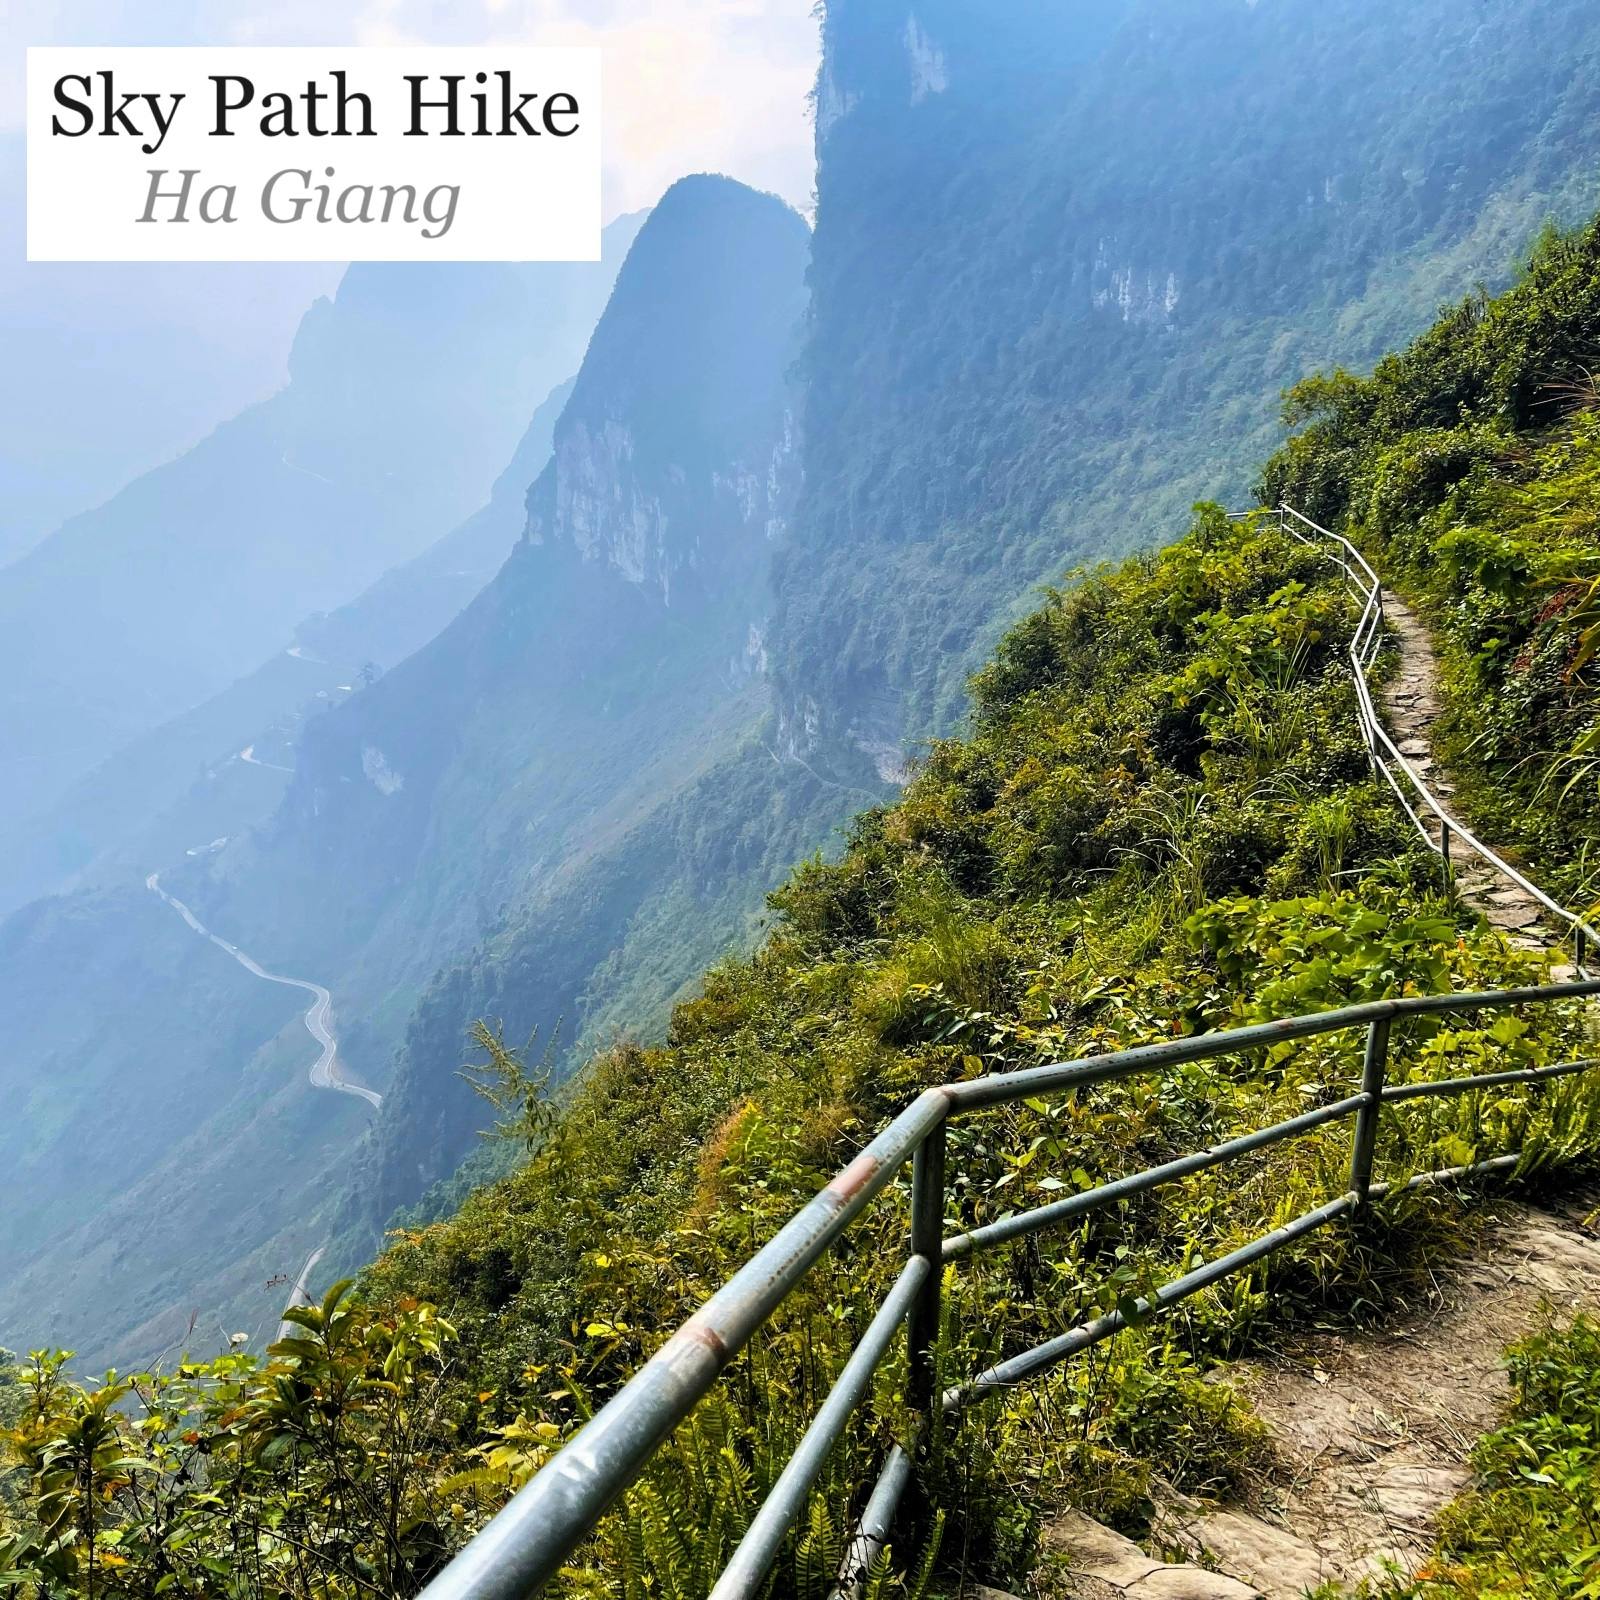 Sky Path Hike, Ha Giang, Vietnam